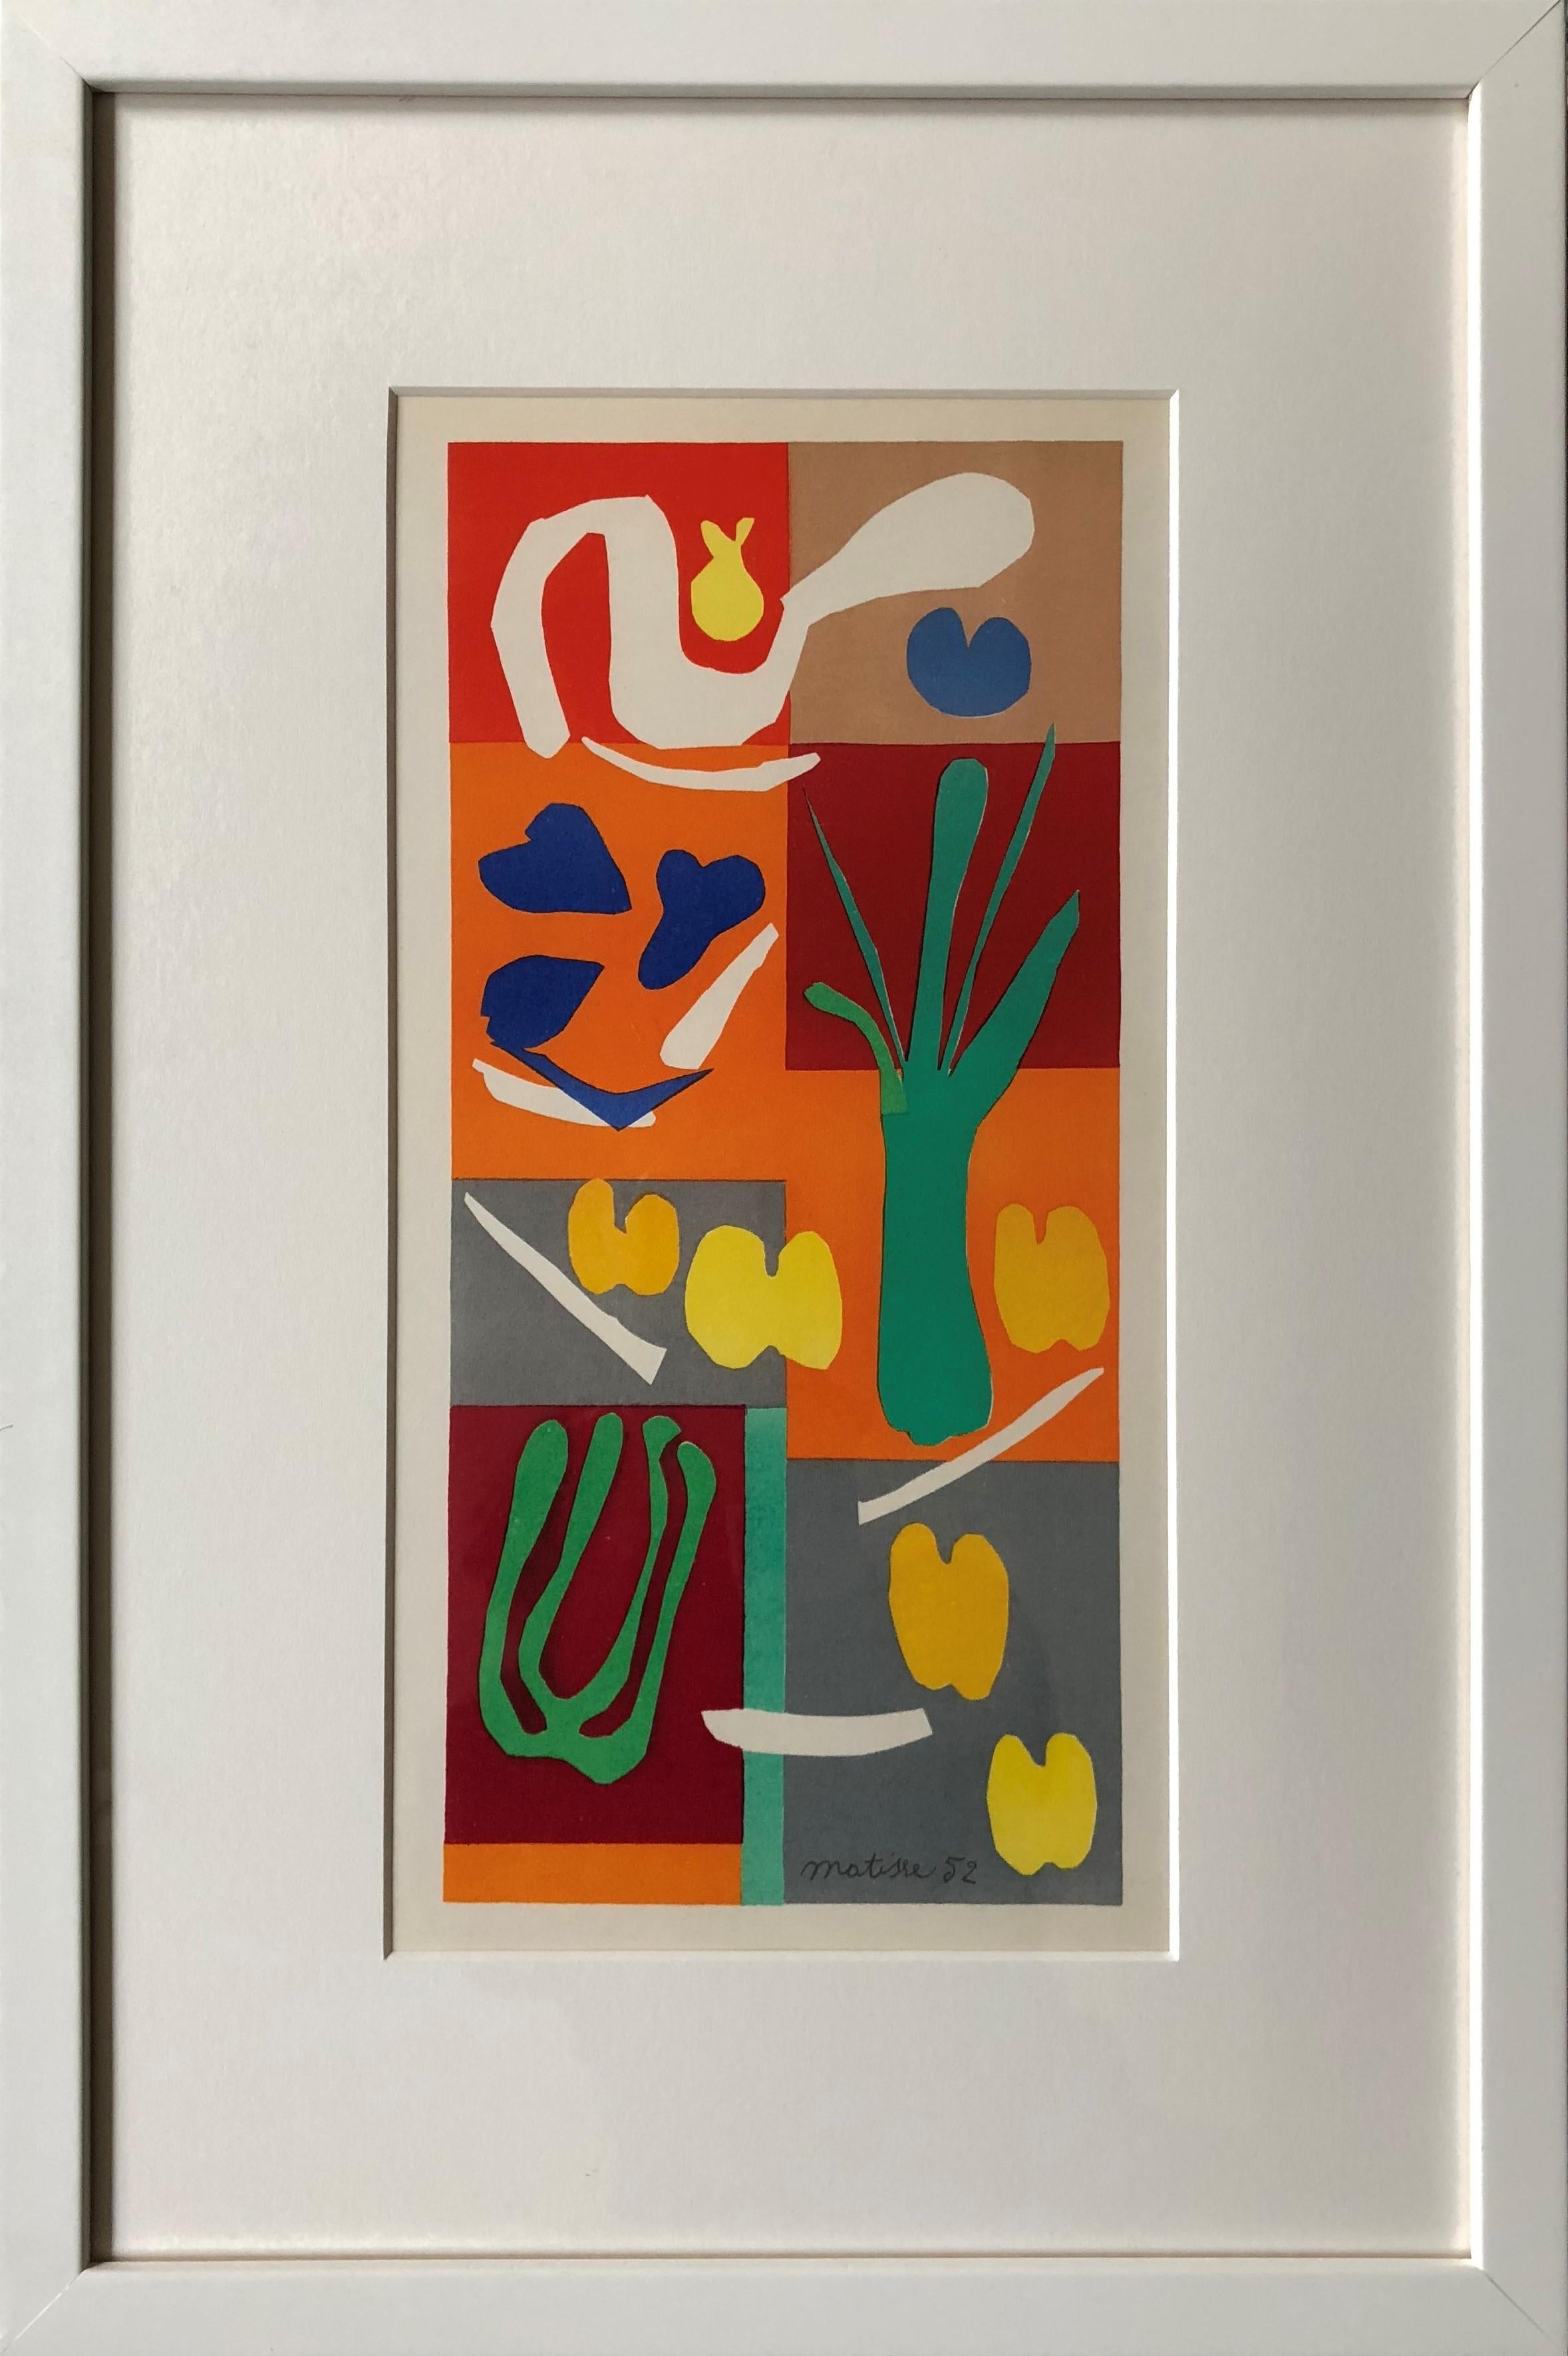 (after) Henri Matisse Print - Vegetaux, Henri Matisse, Verve, Mourlot Freres, cut-out, collage, Fauvism, 